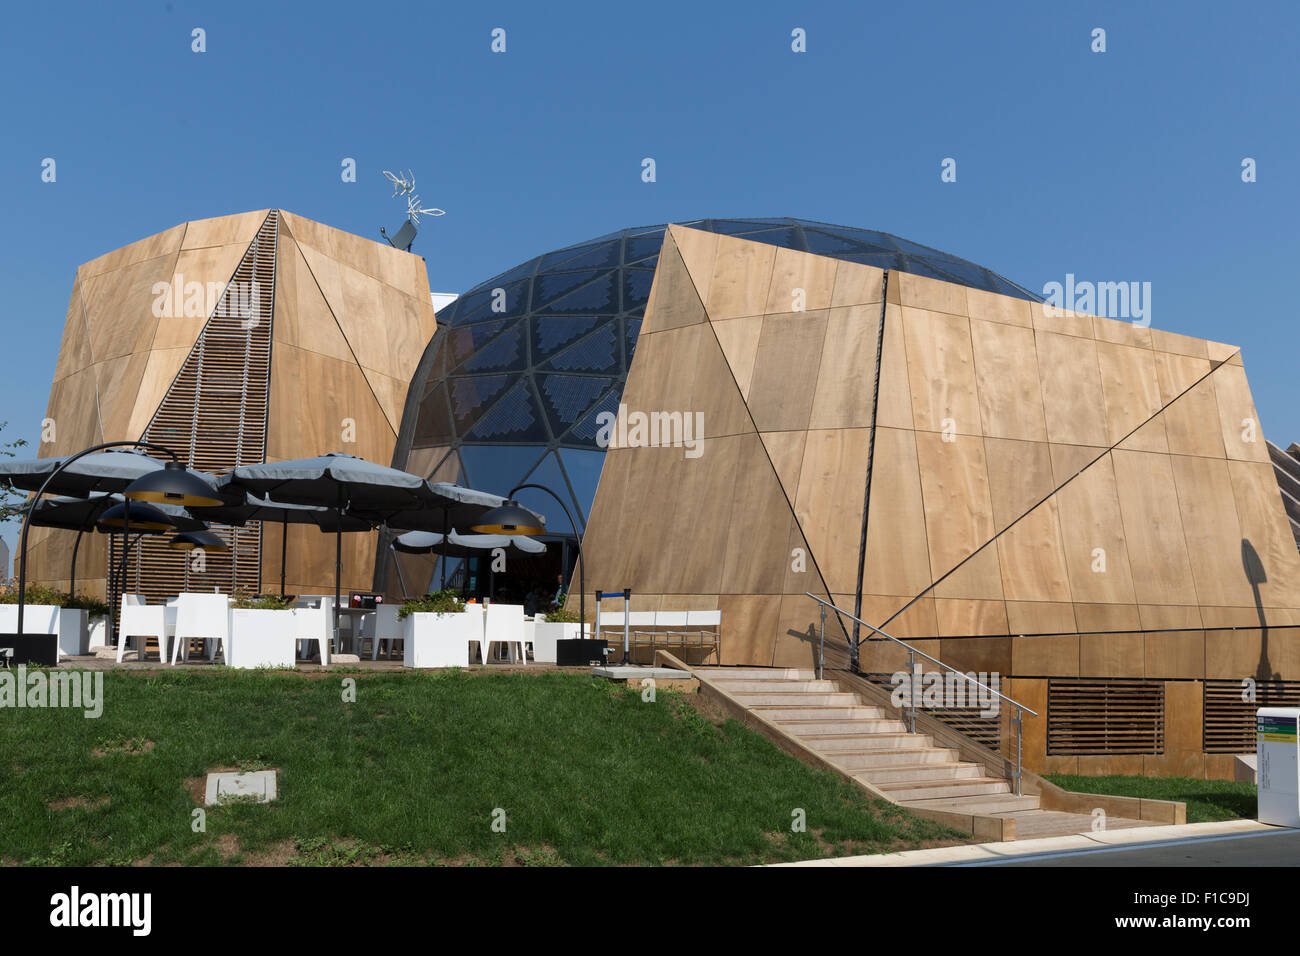 Mailand, Italien, 12. August 2015: Detail des Pavillons auf der Messe Expo 2015 Italien Belgien. Stockfoto